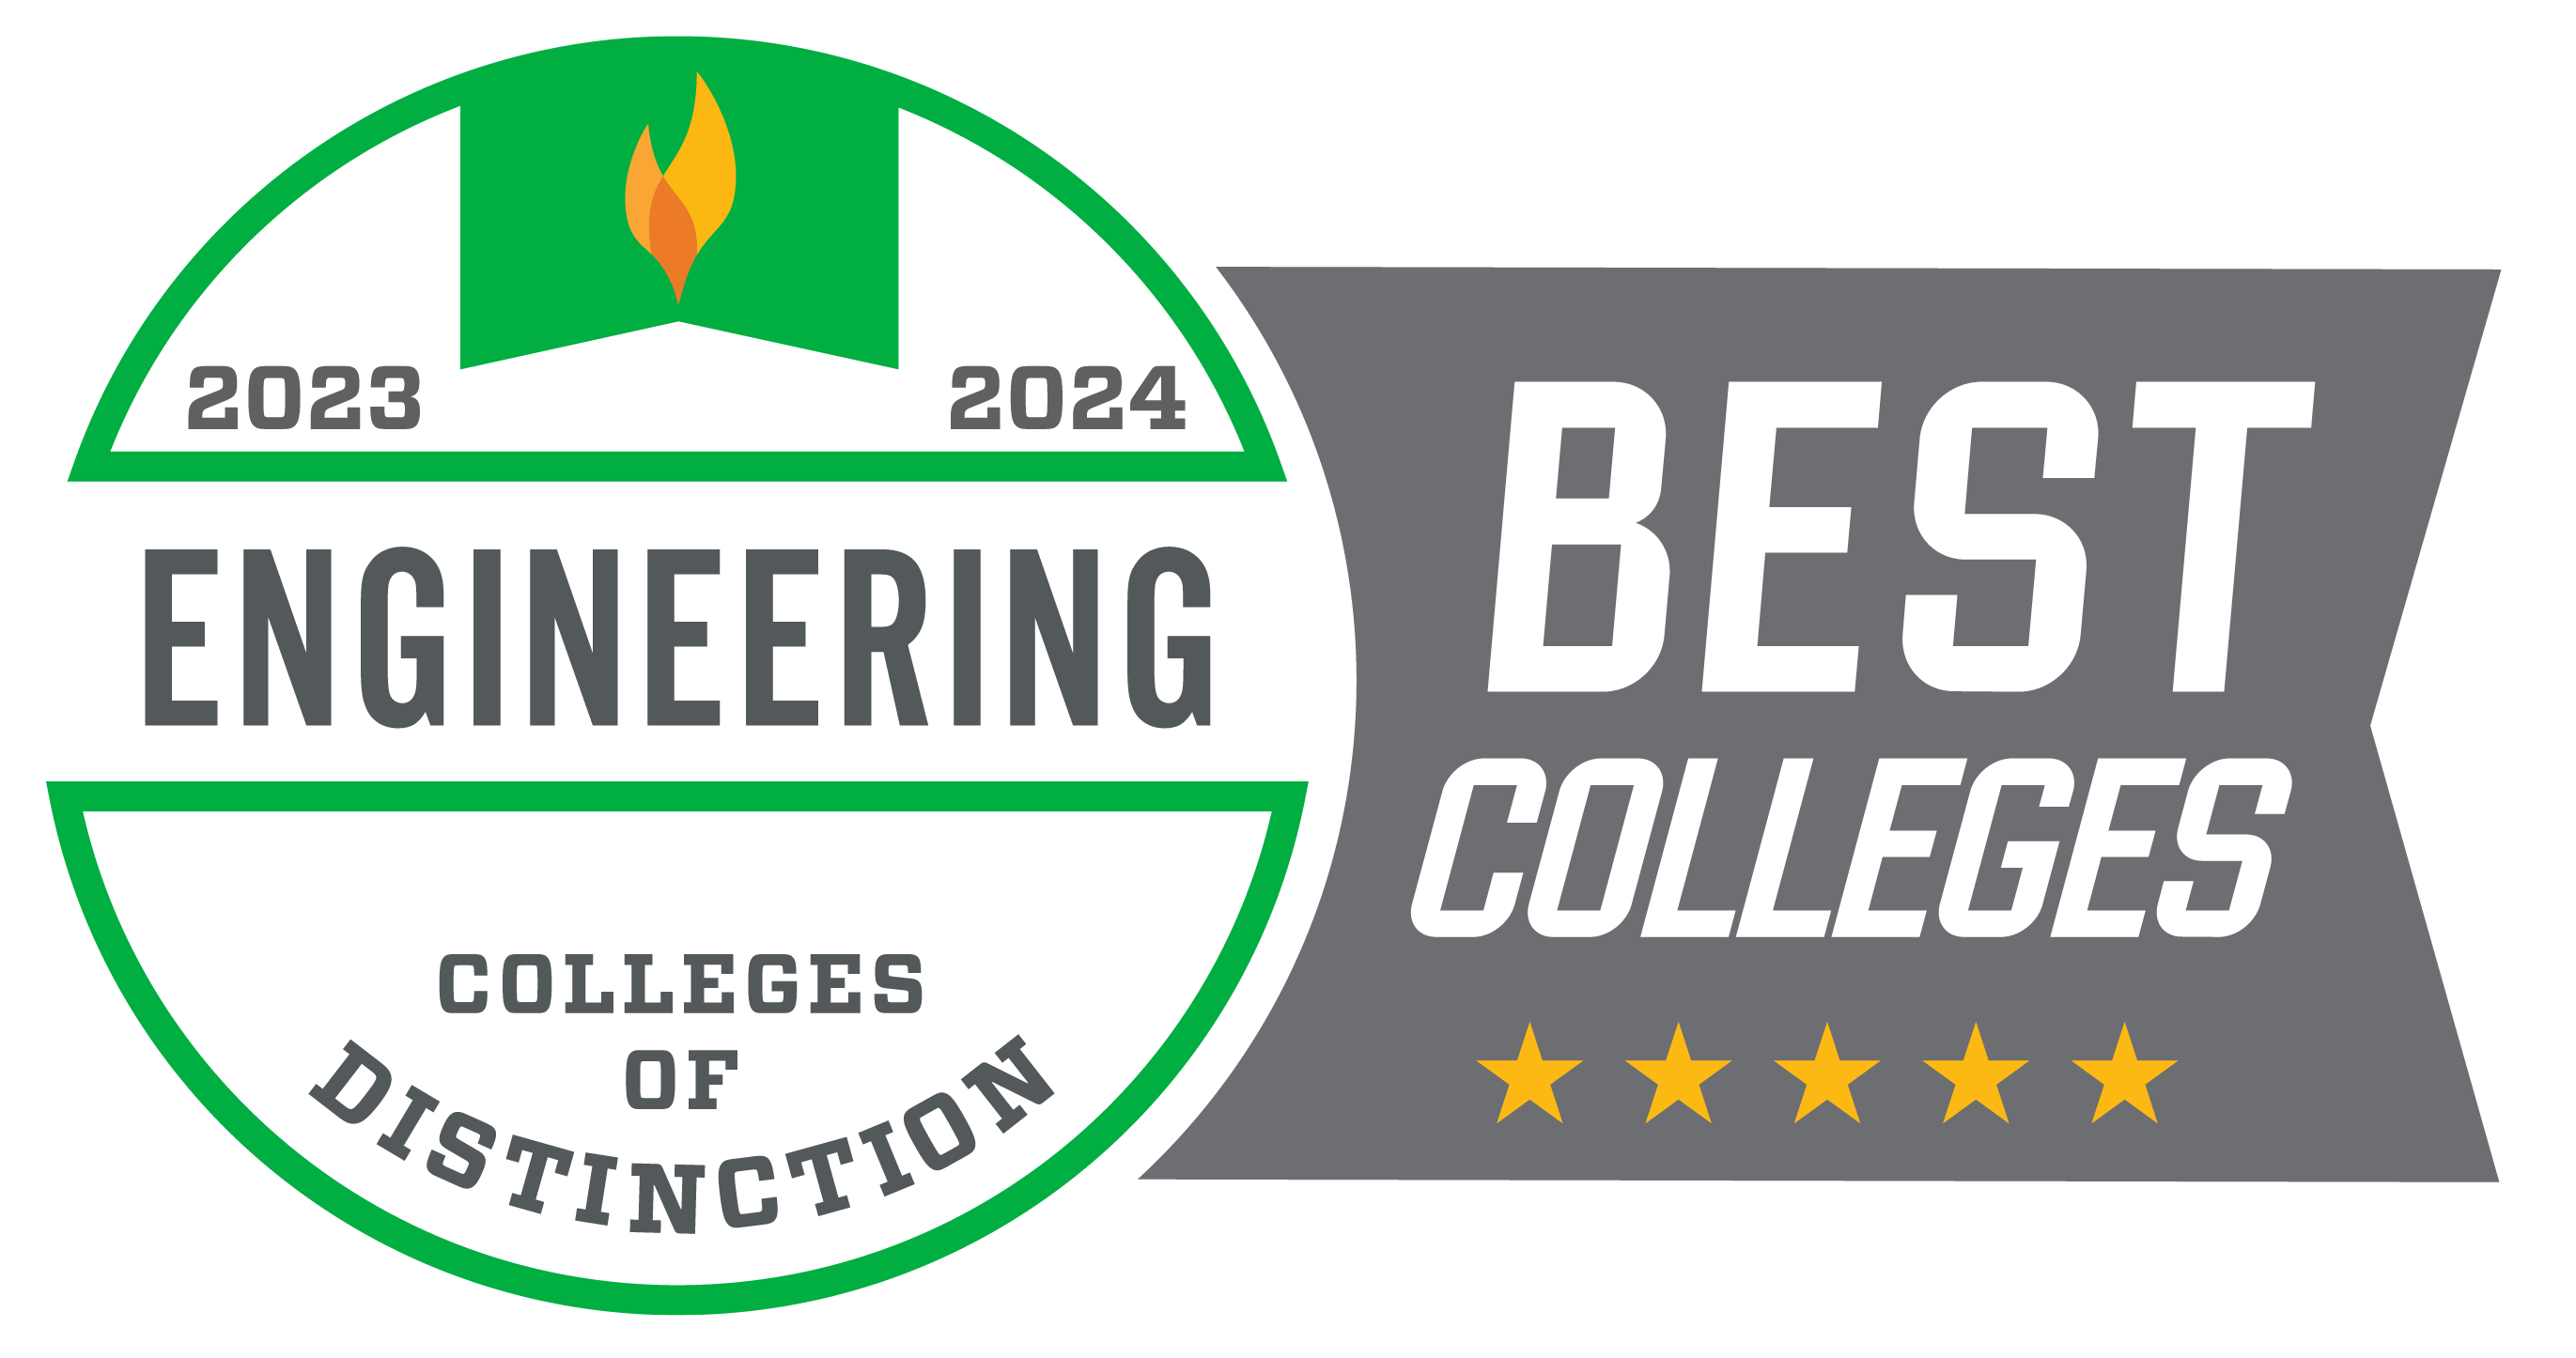 Best Colleges Badge